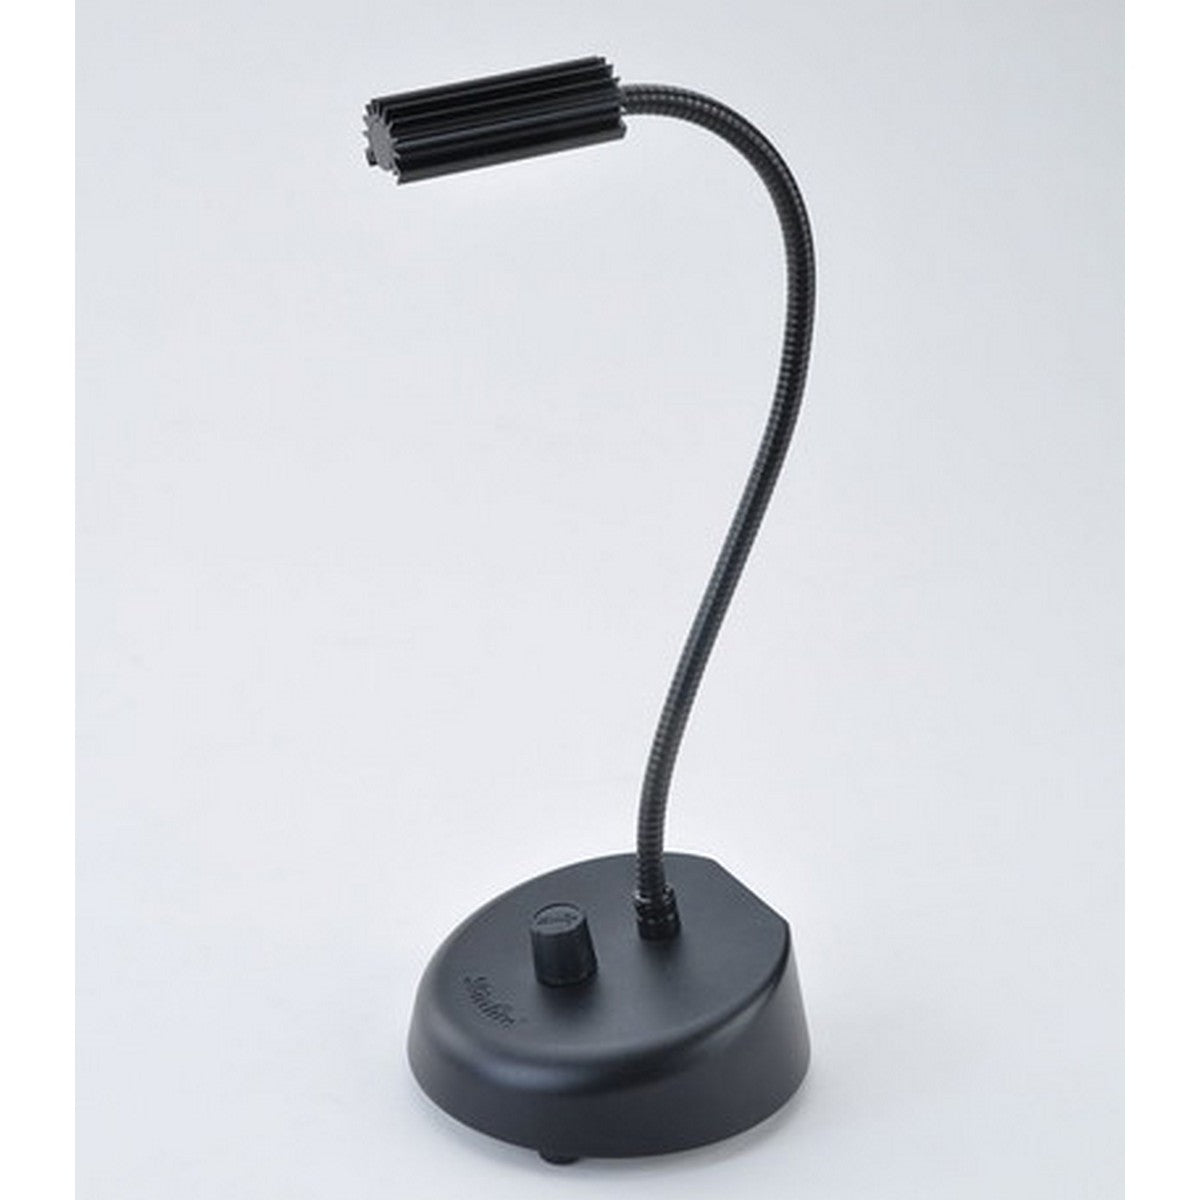 Littlite LW-12-HI | High Intensity Desk Light with Dimmer 12 inch  gooseneck